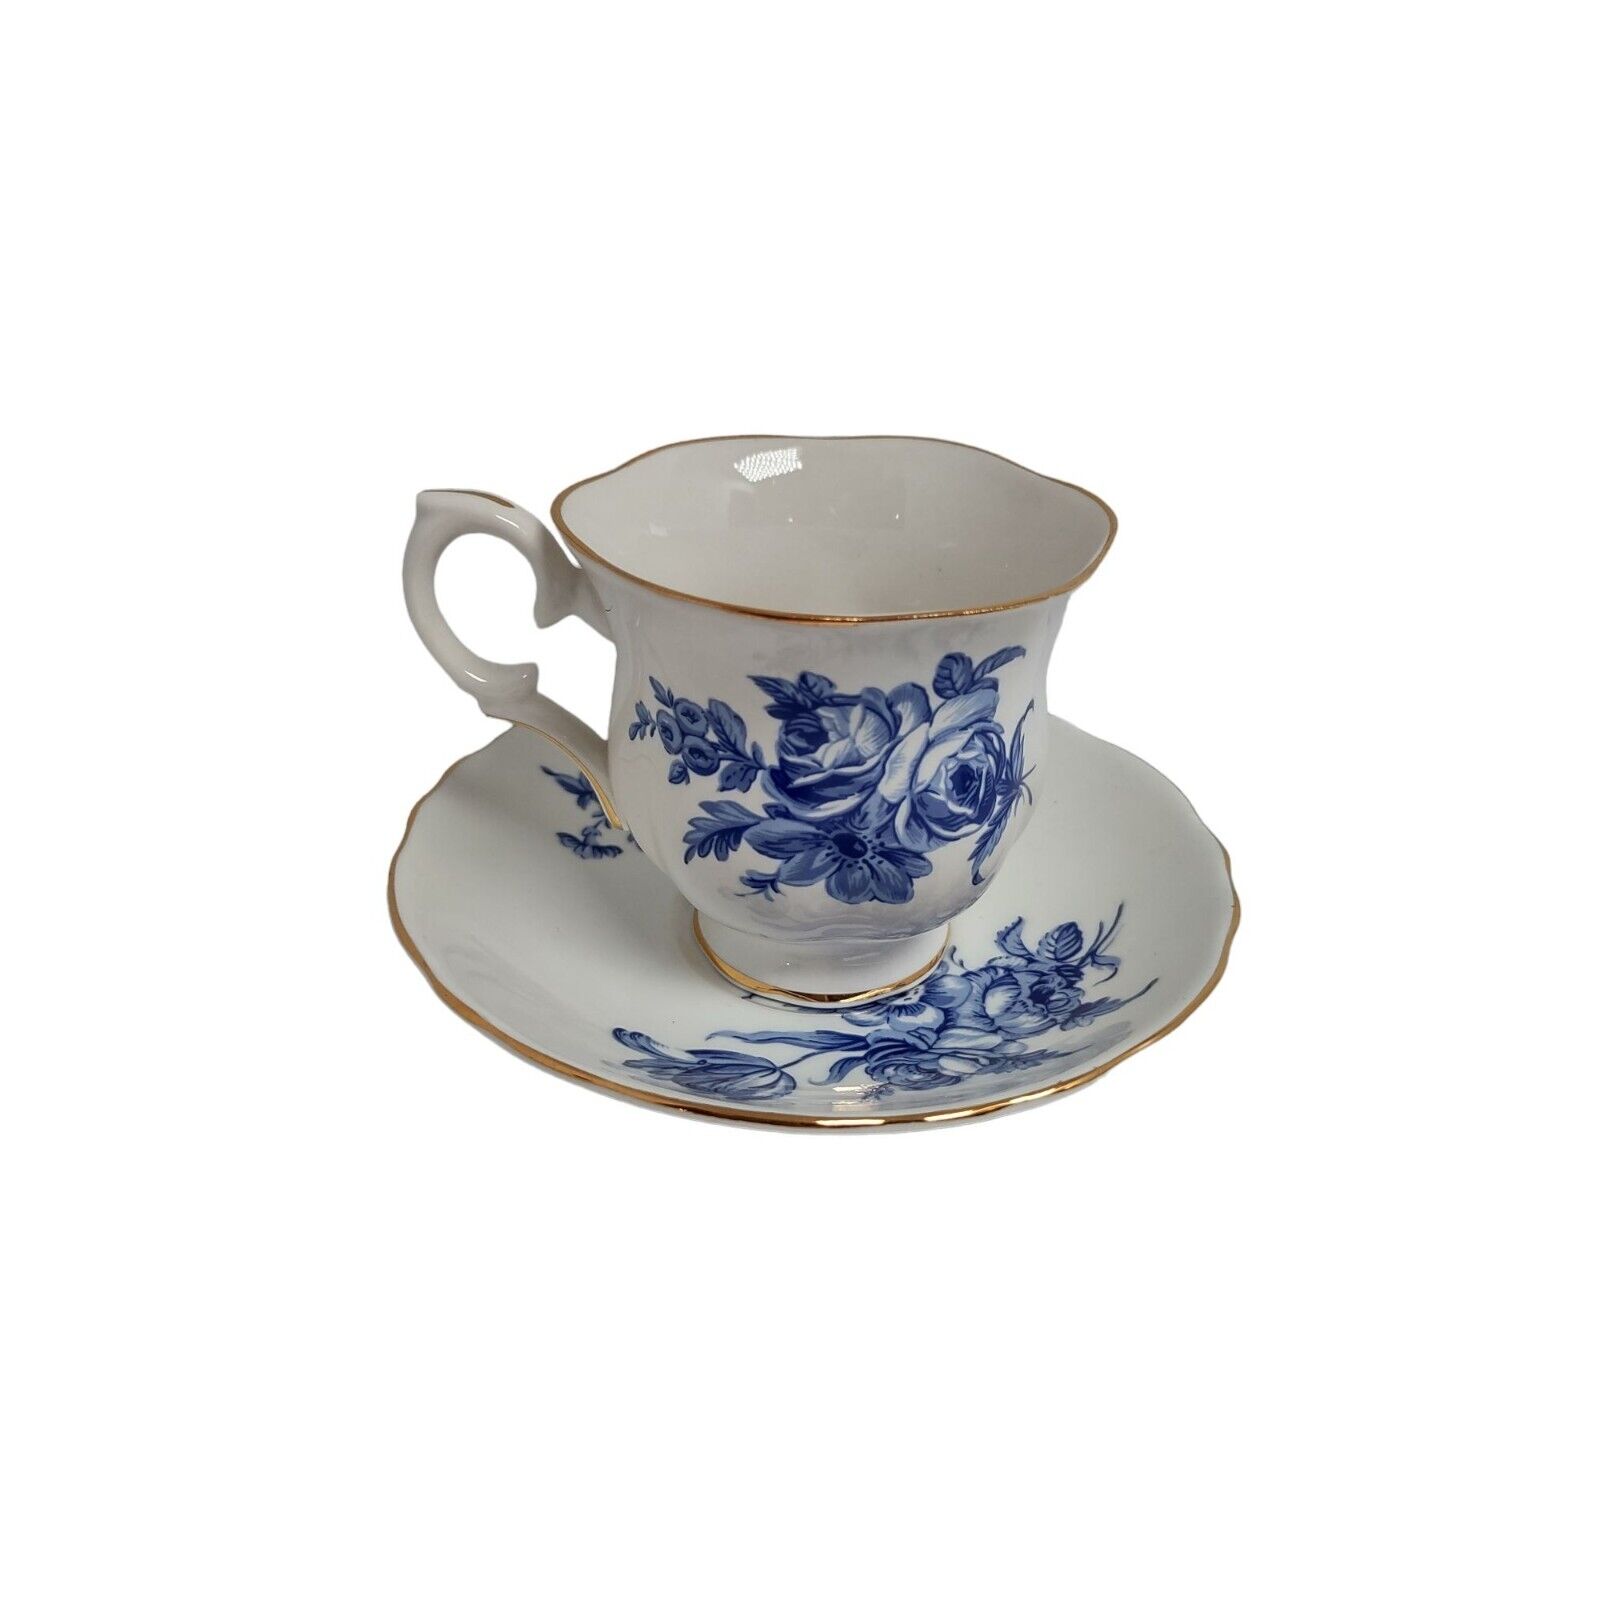 Vintage Collectible Crown Staffordshire England Blue Floral Teacup Saucer Set